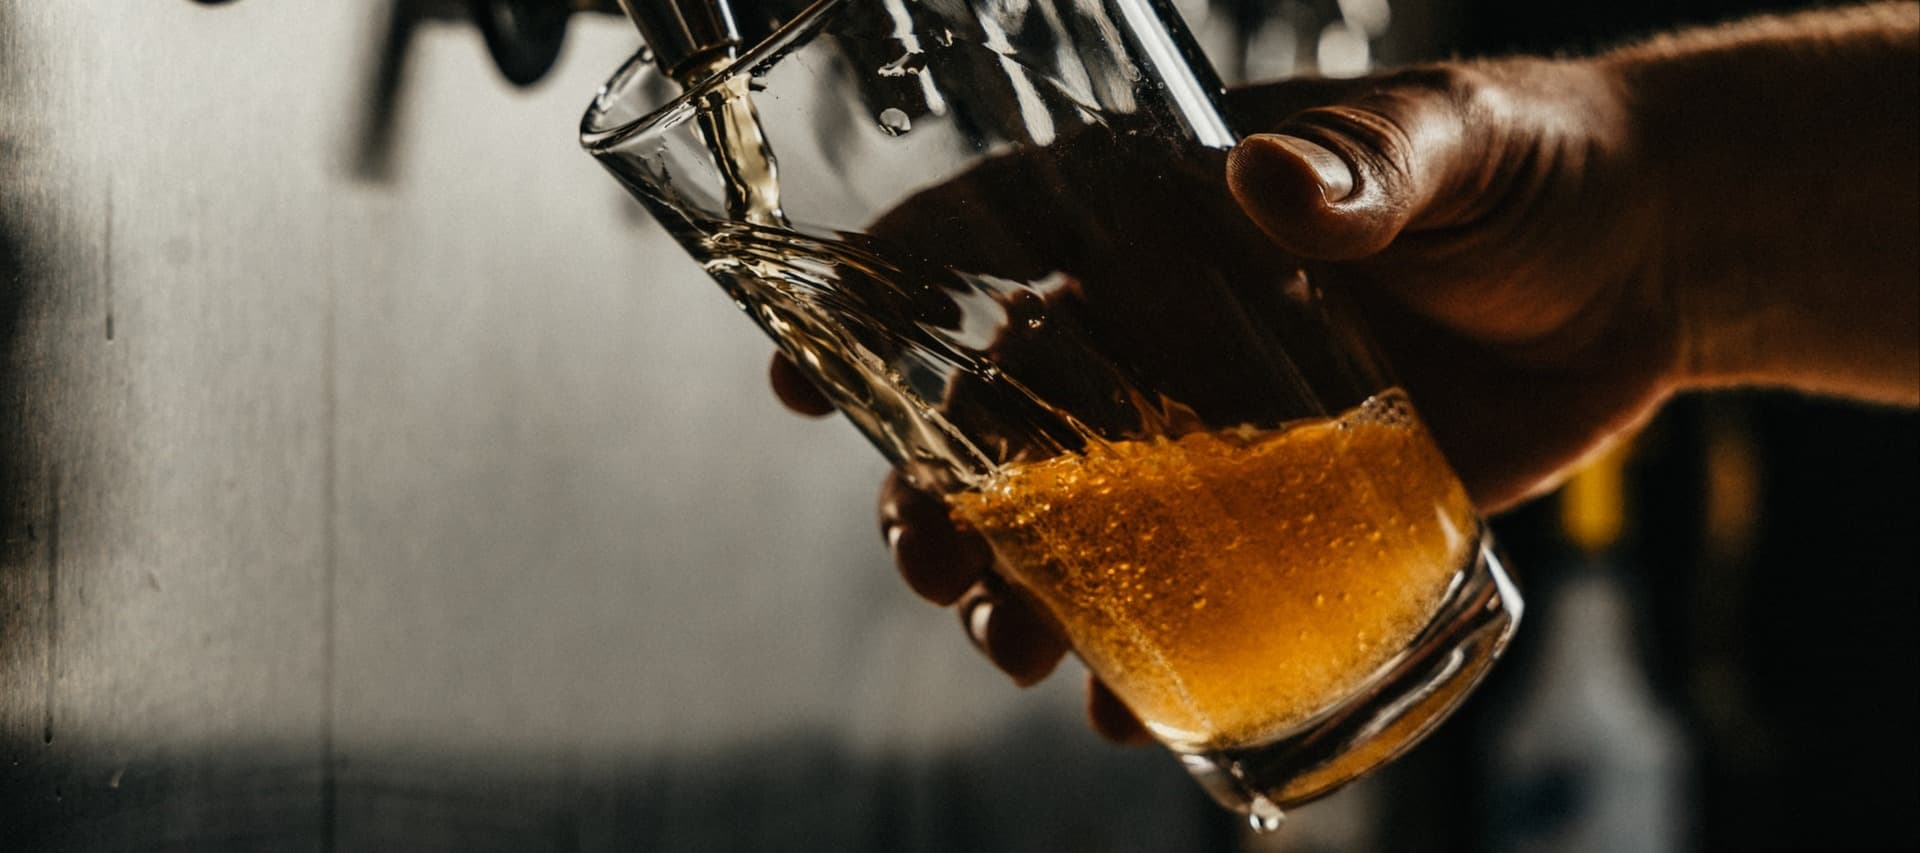 Фото новости: "Американский стартап разработал дрожжи для варки пива без хмеля"